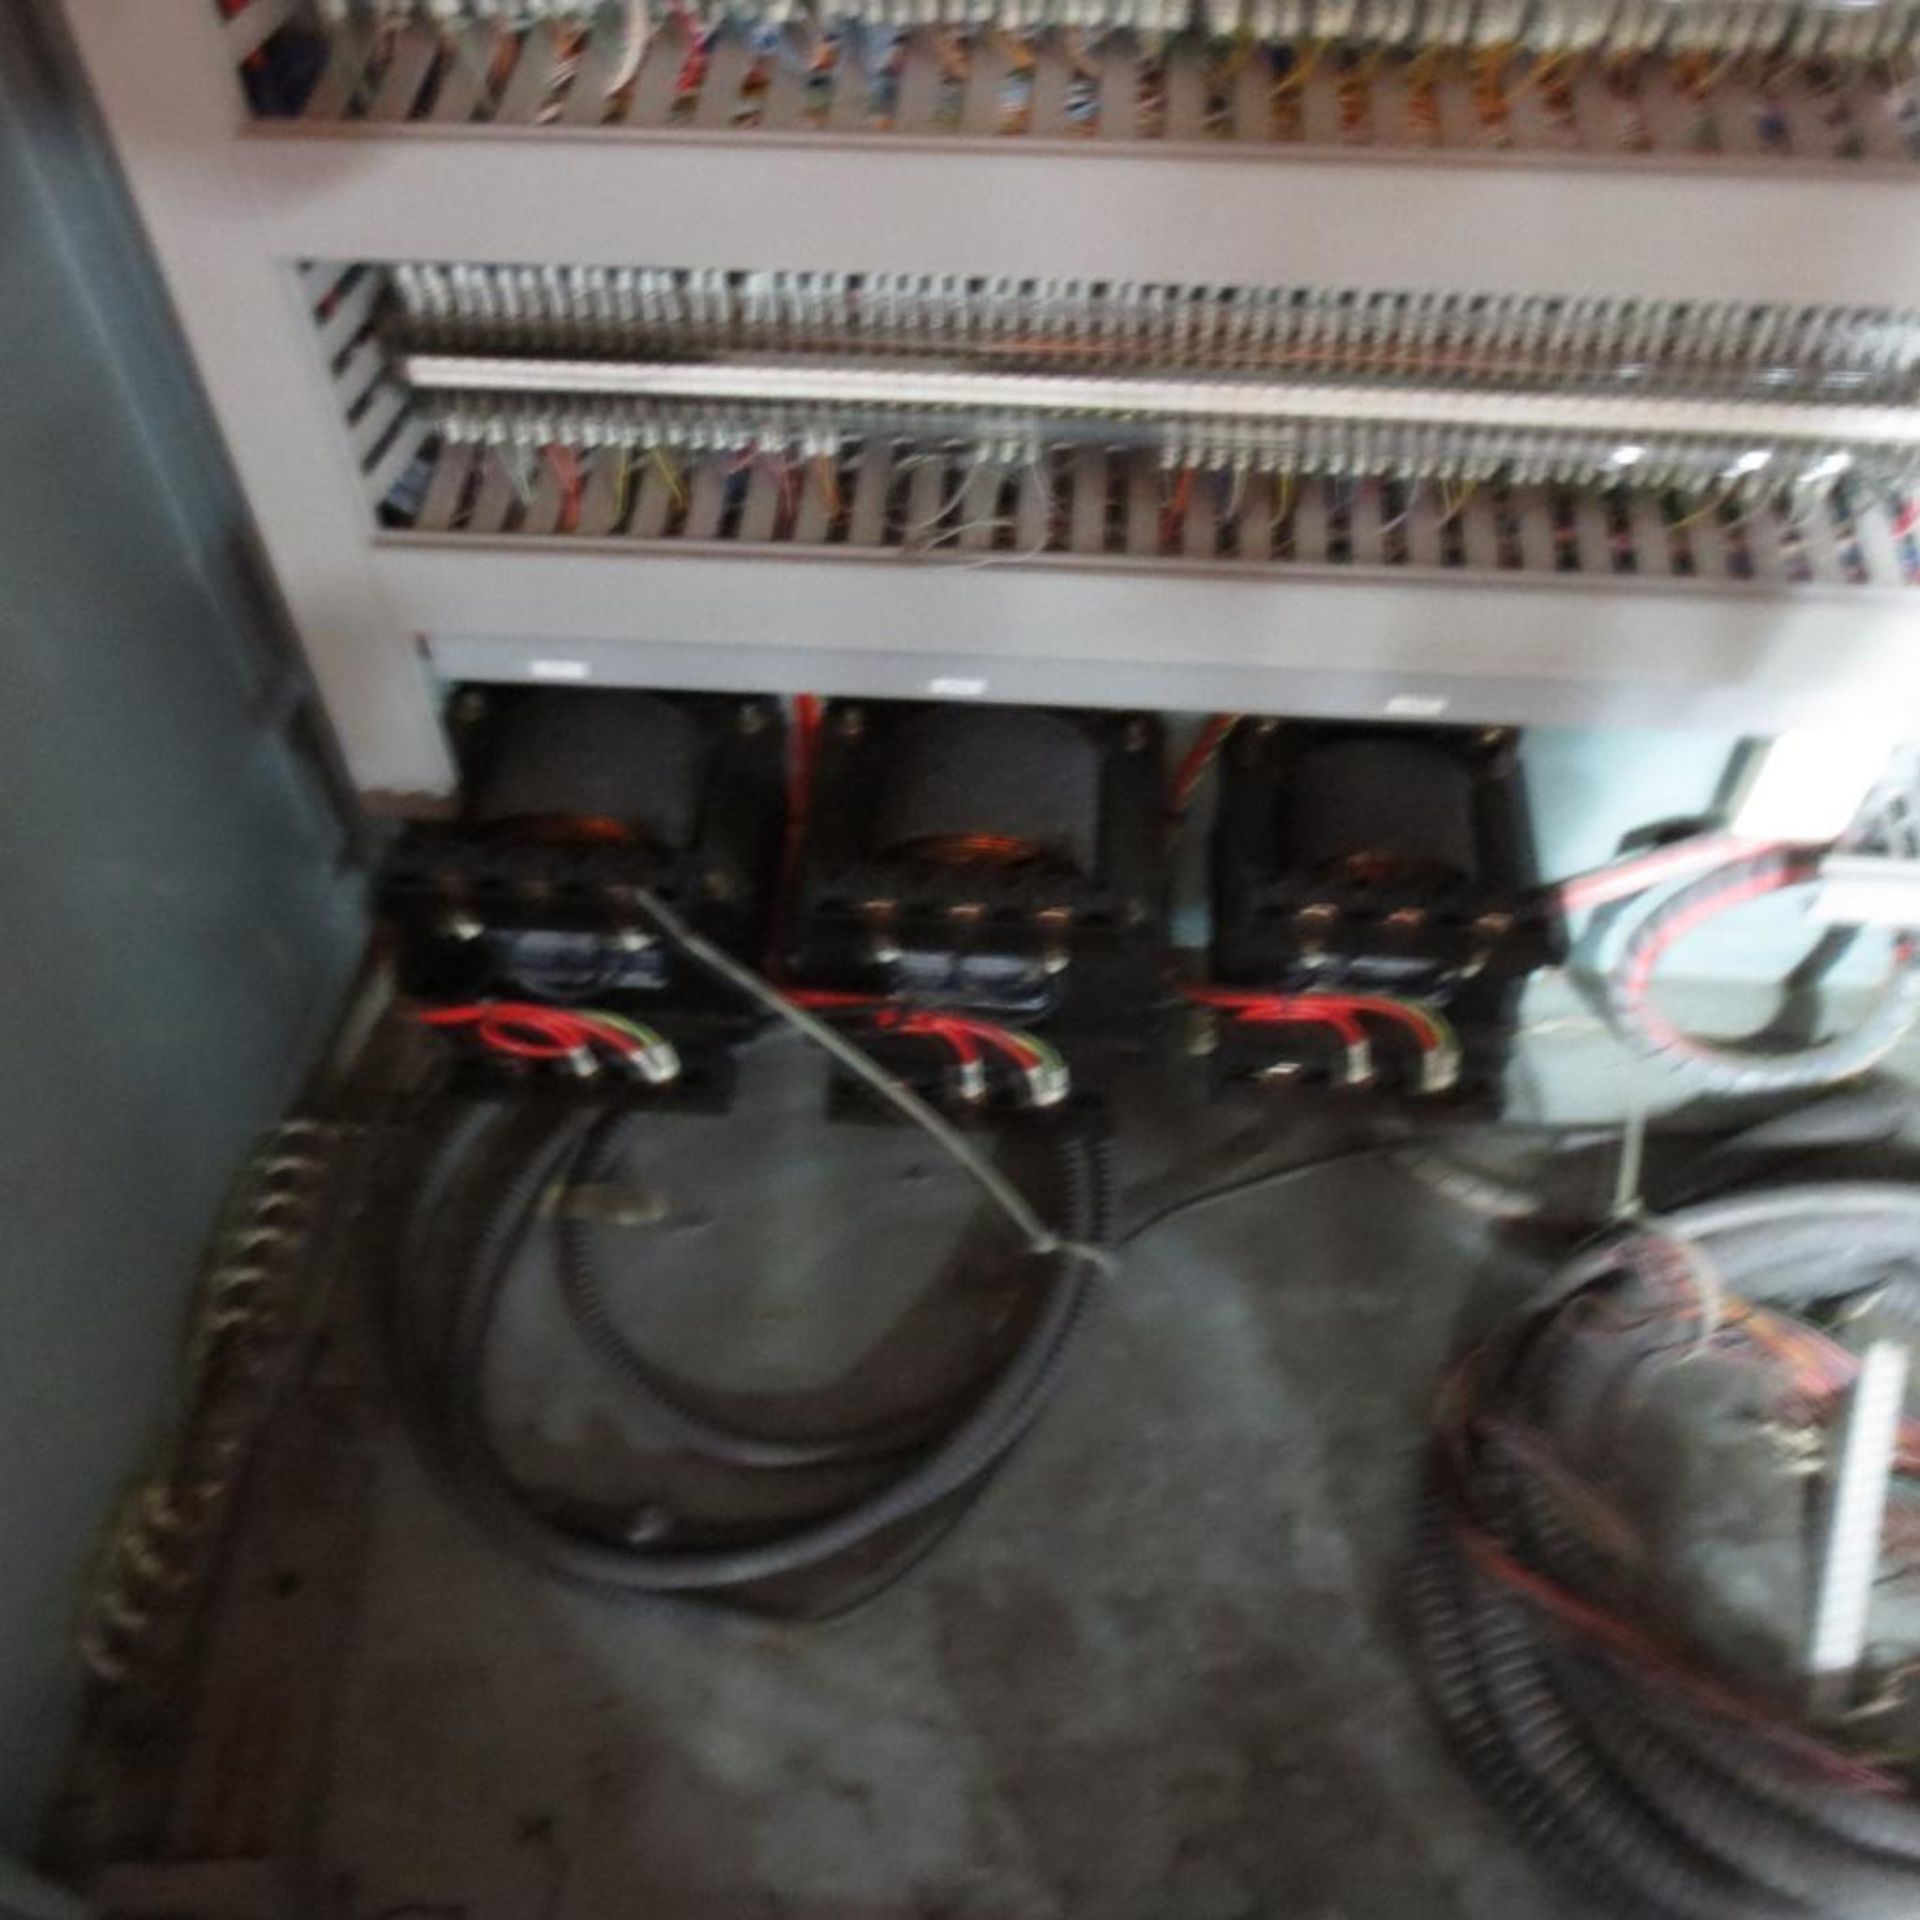 L/UL Module Control Cabinet. Loading Fee is $30.00 - Image 6 of 6